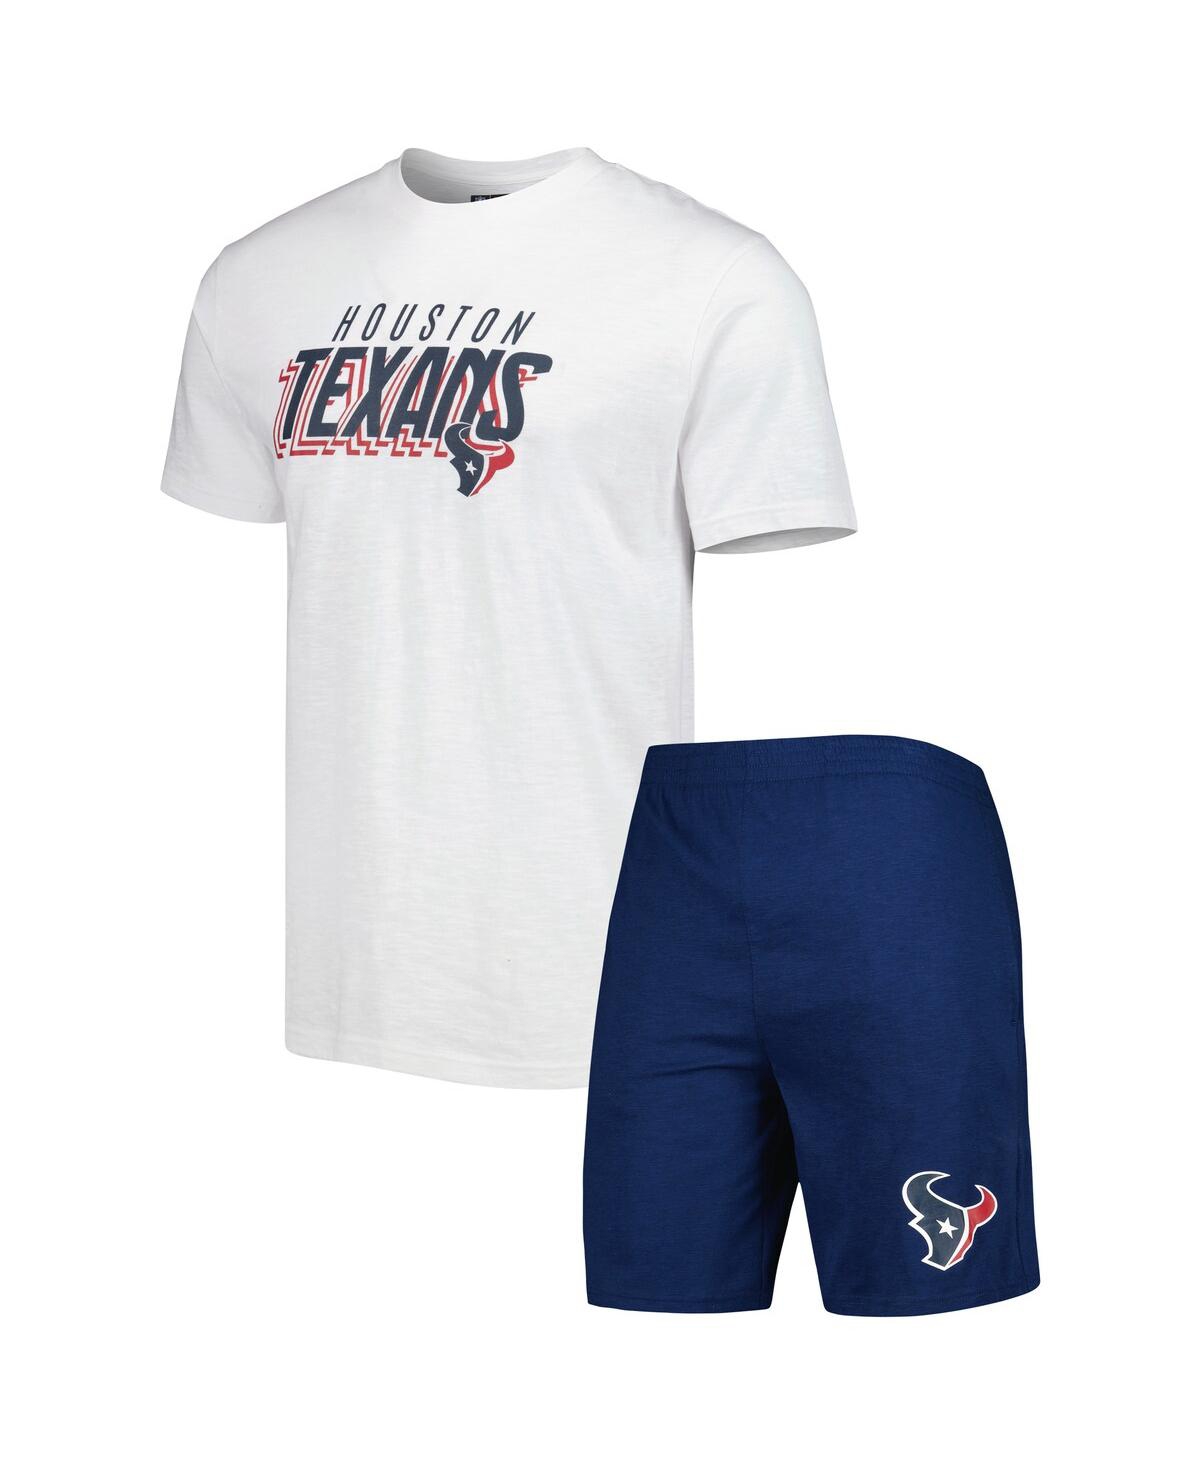 Men's Concepts Sport Navy, White Houston Texans Downfield T-shirt and Shorts Sleep Set - Navy, White